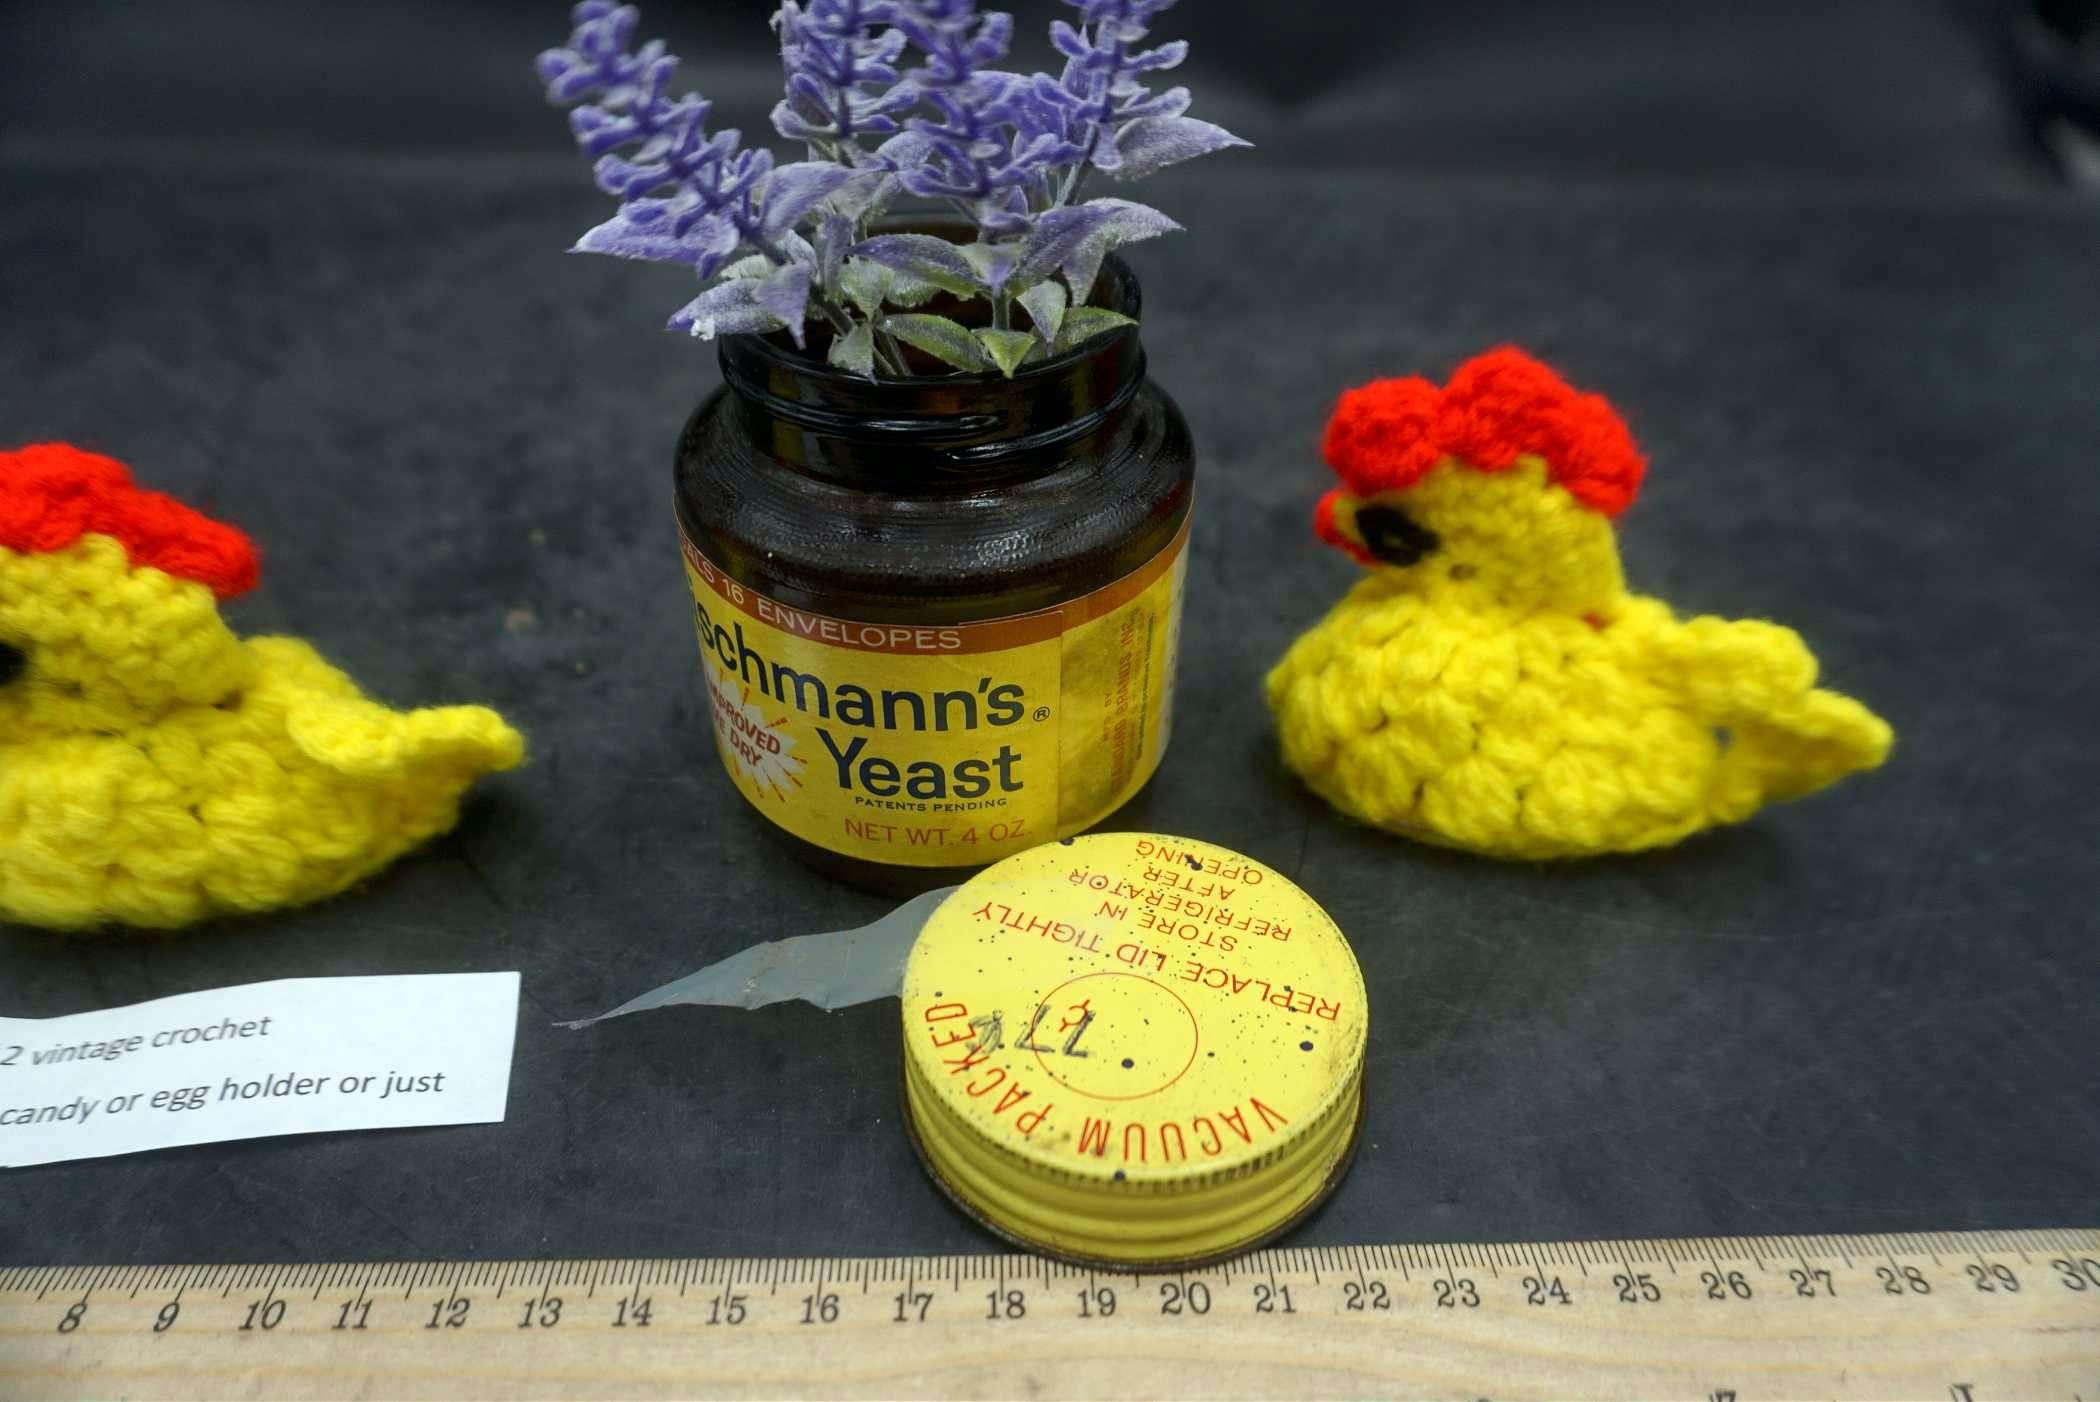 Set Of 2 Vintage Crochet Chicks Jar W/ Flowers,